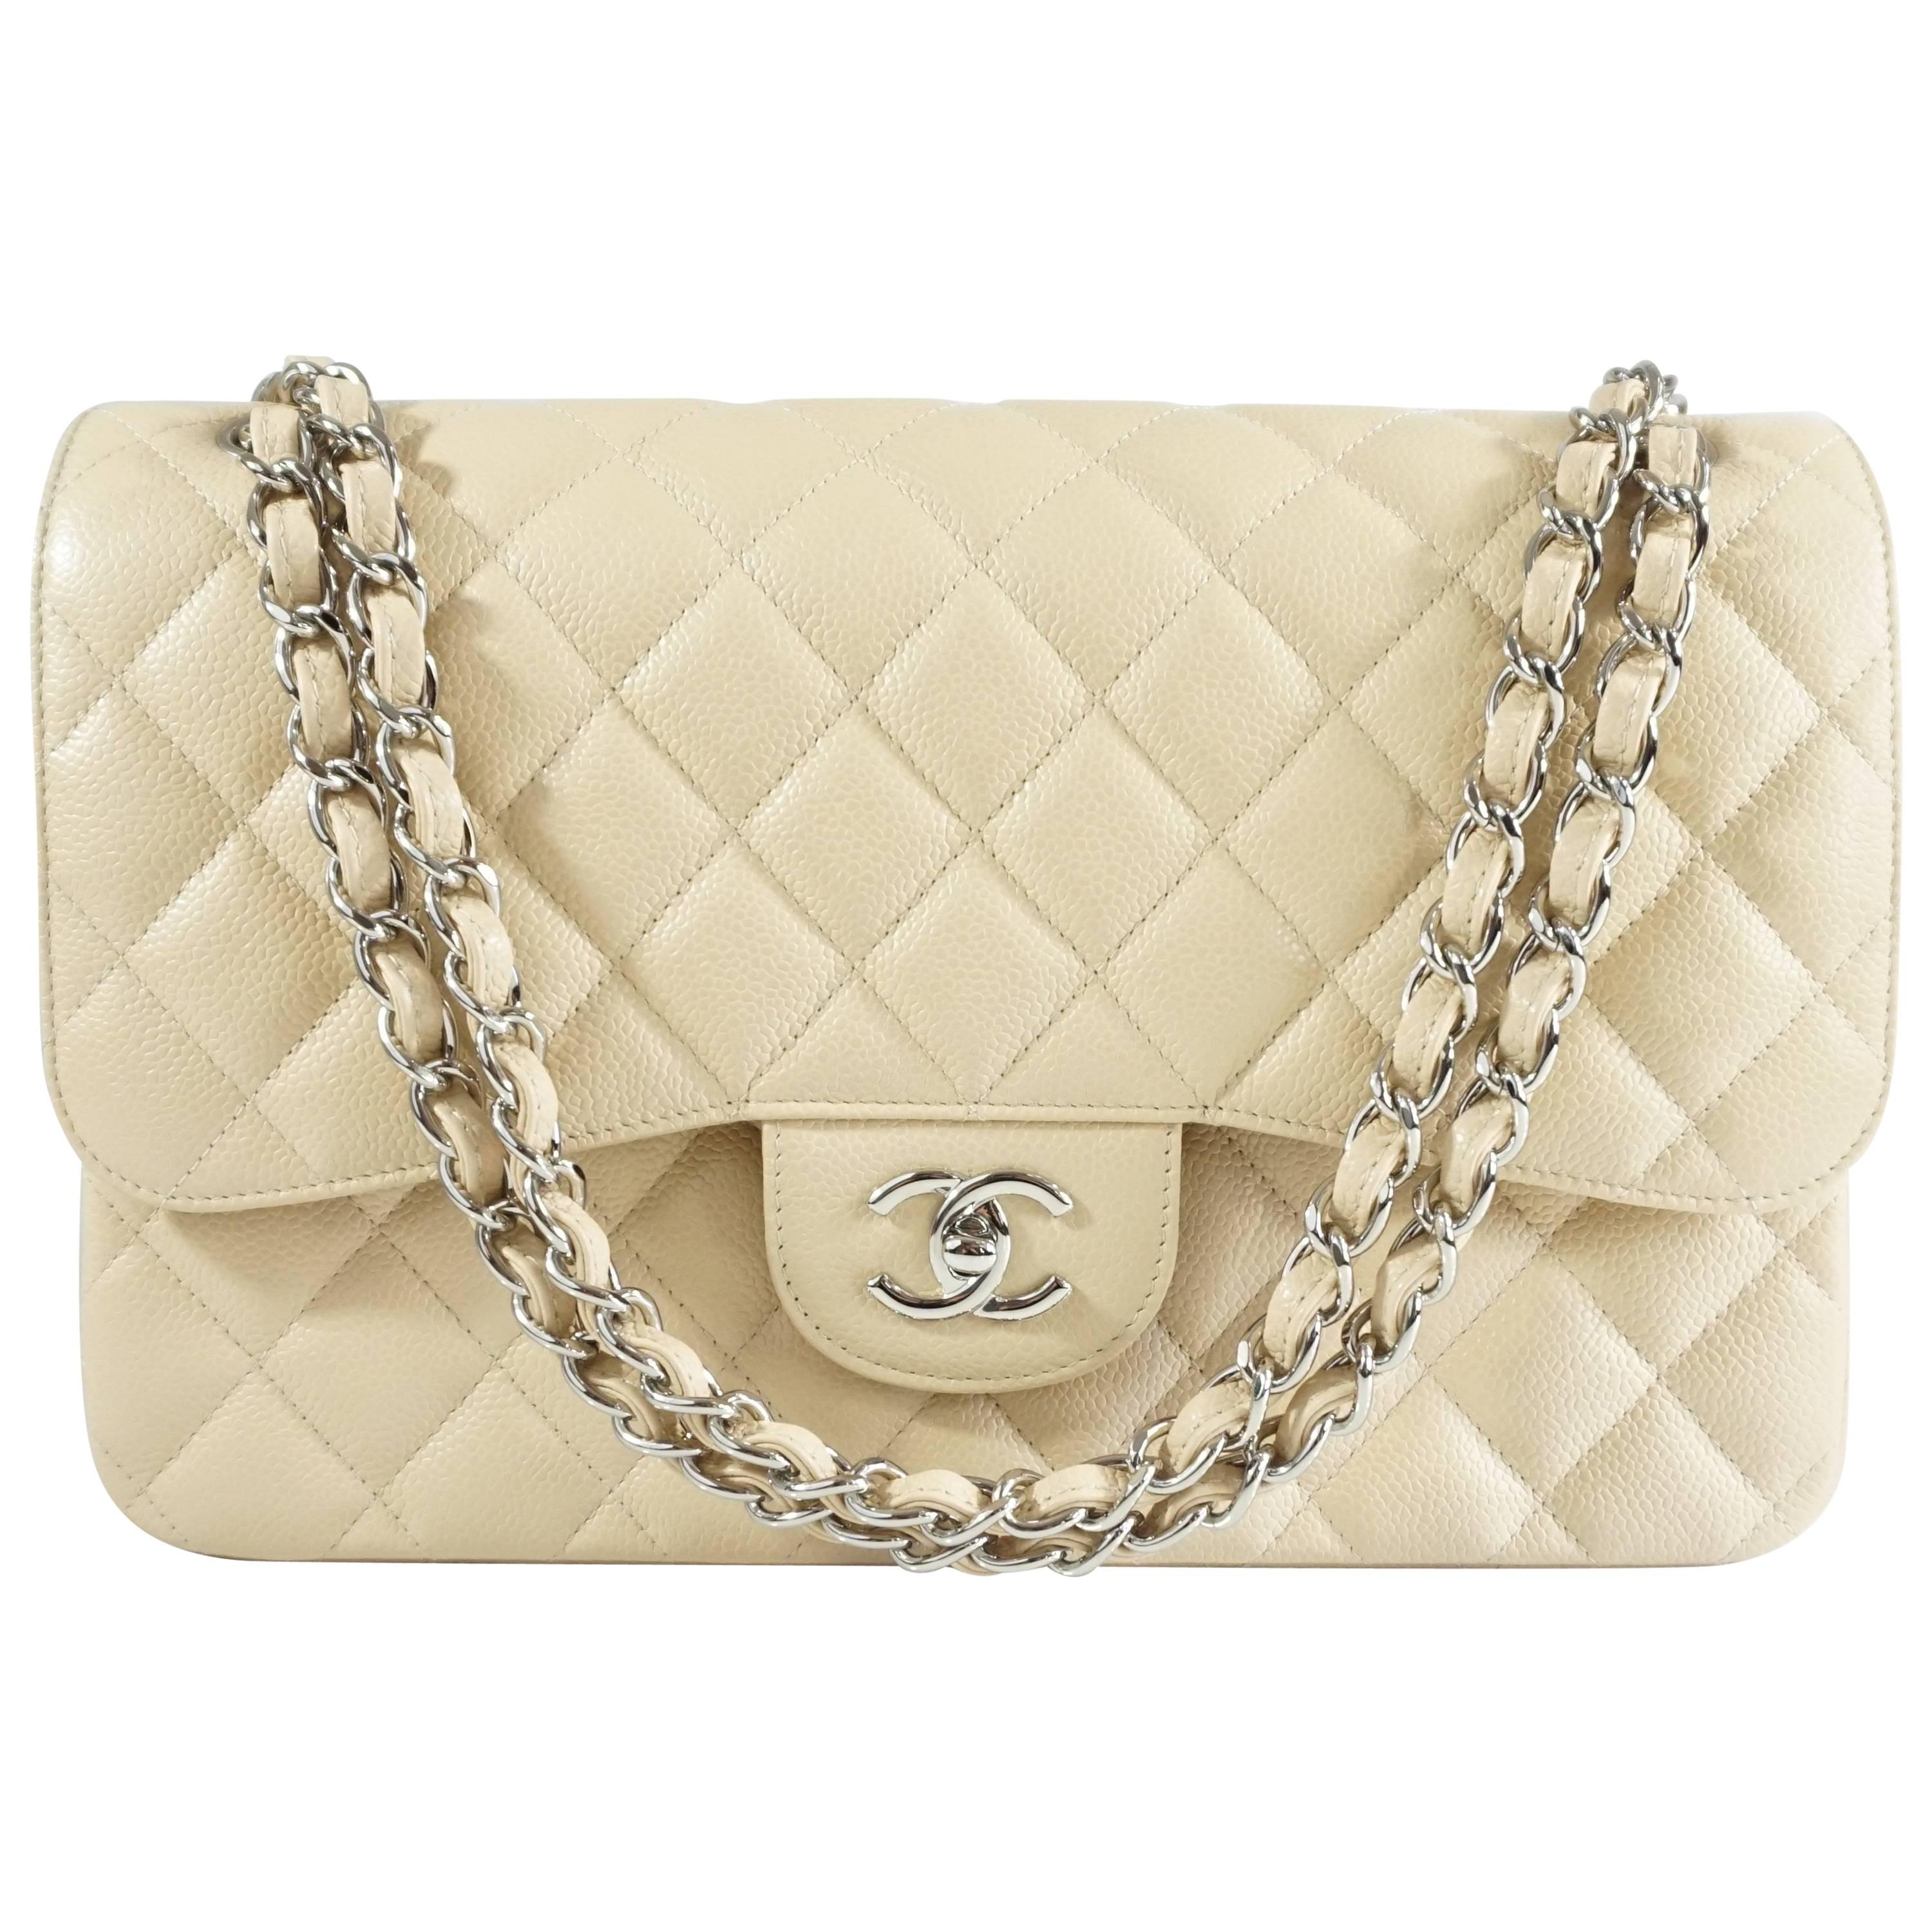 Chanel Beige Caviar Jumbo Classic Double Flap Handbag - 2015